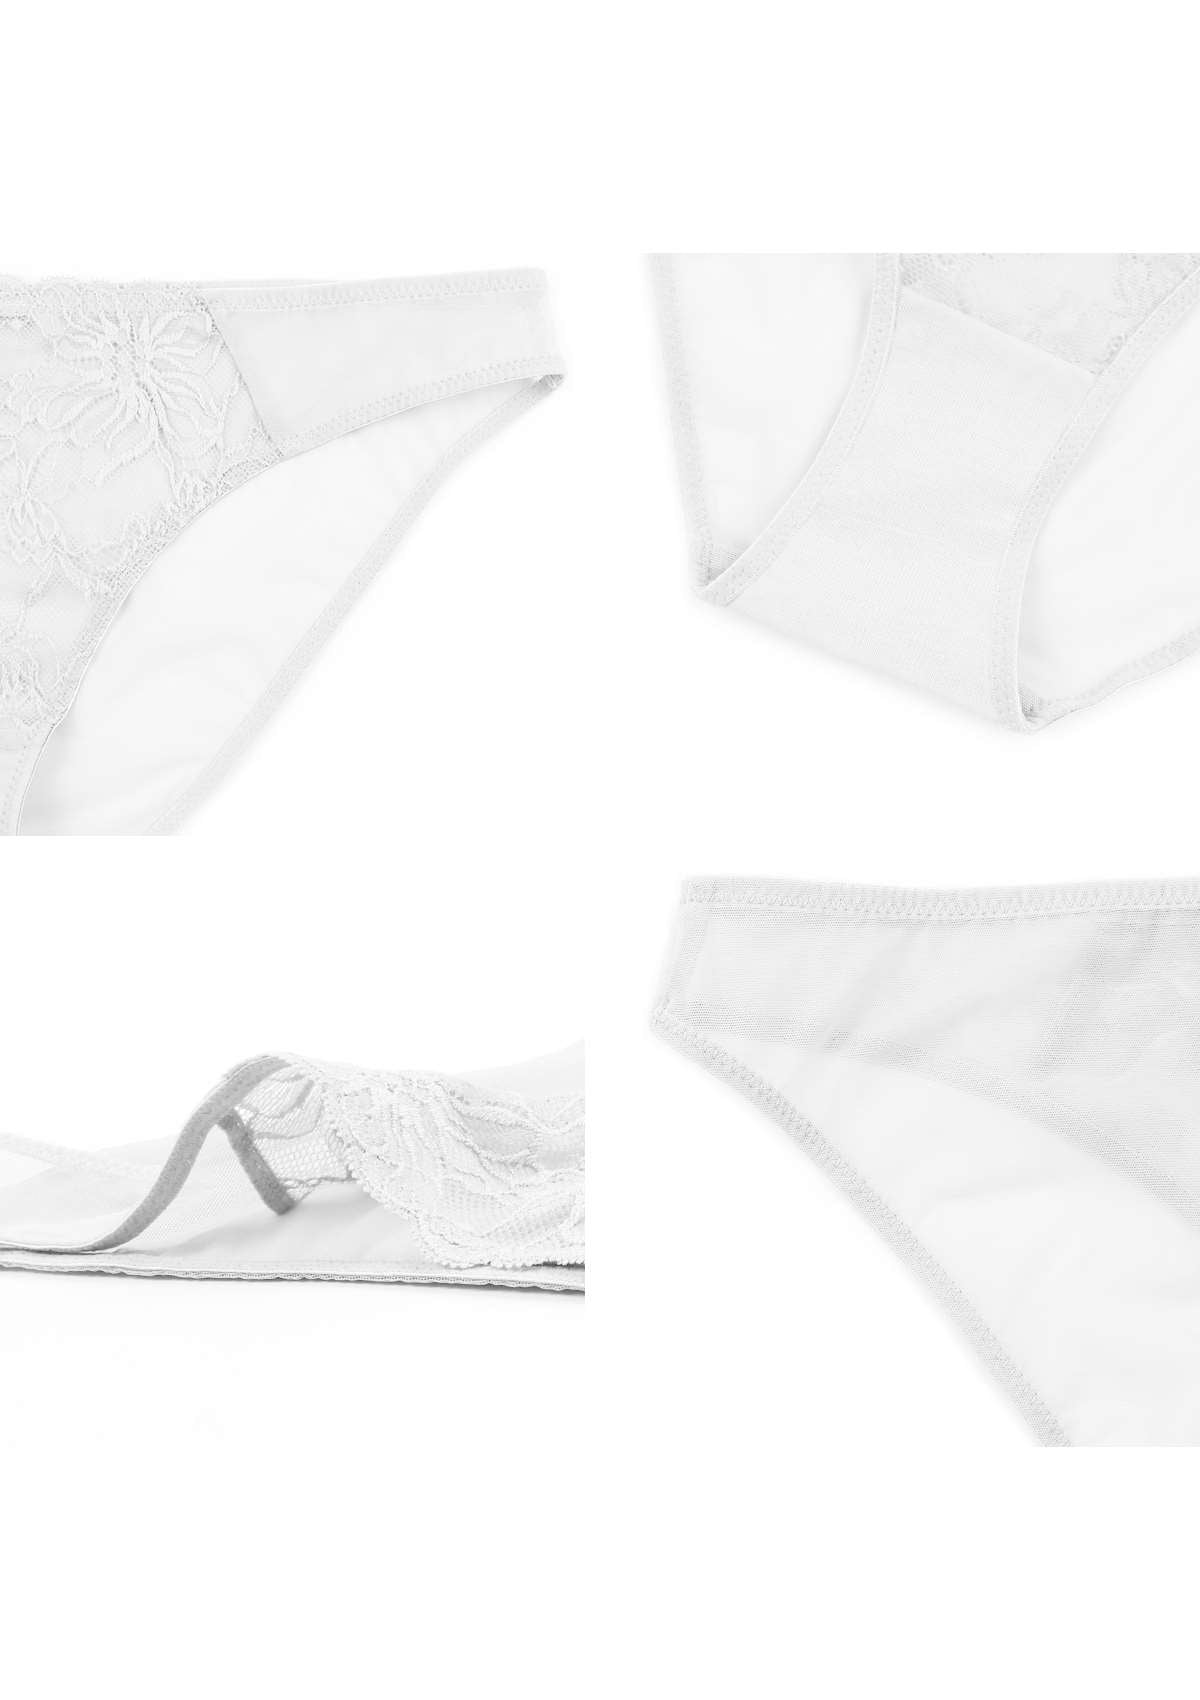 HSIA Mid-Rise Elegant Feminine Sheer Lace Mesh Comfortable Underwear. - XL / High-Rise Brief / White